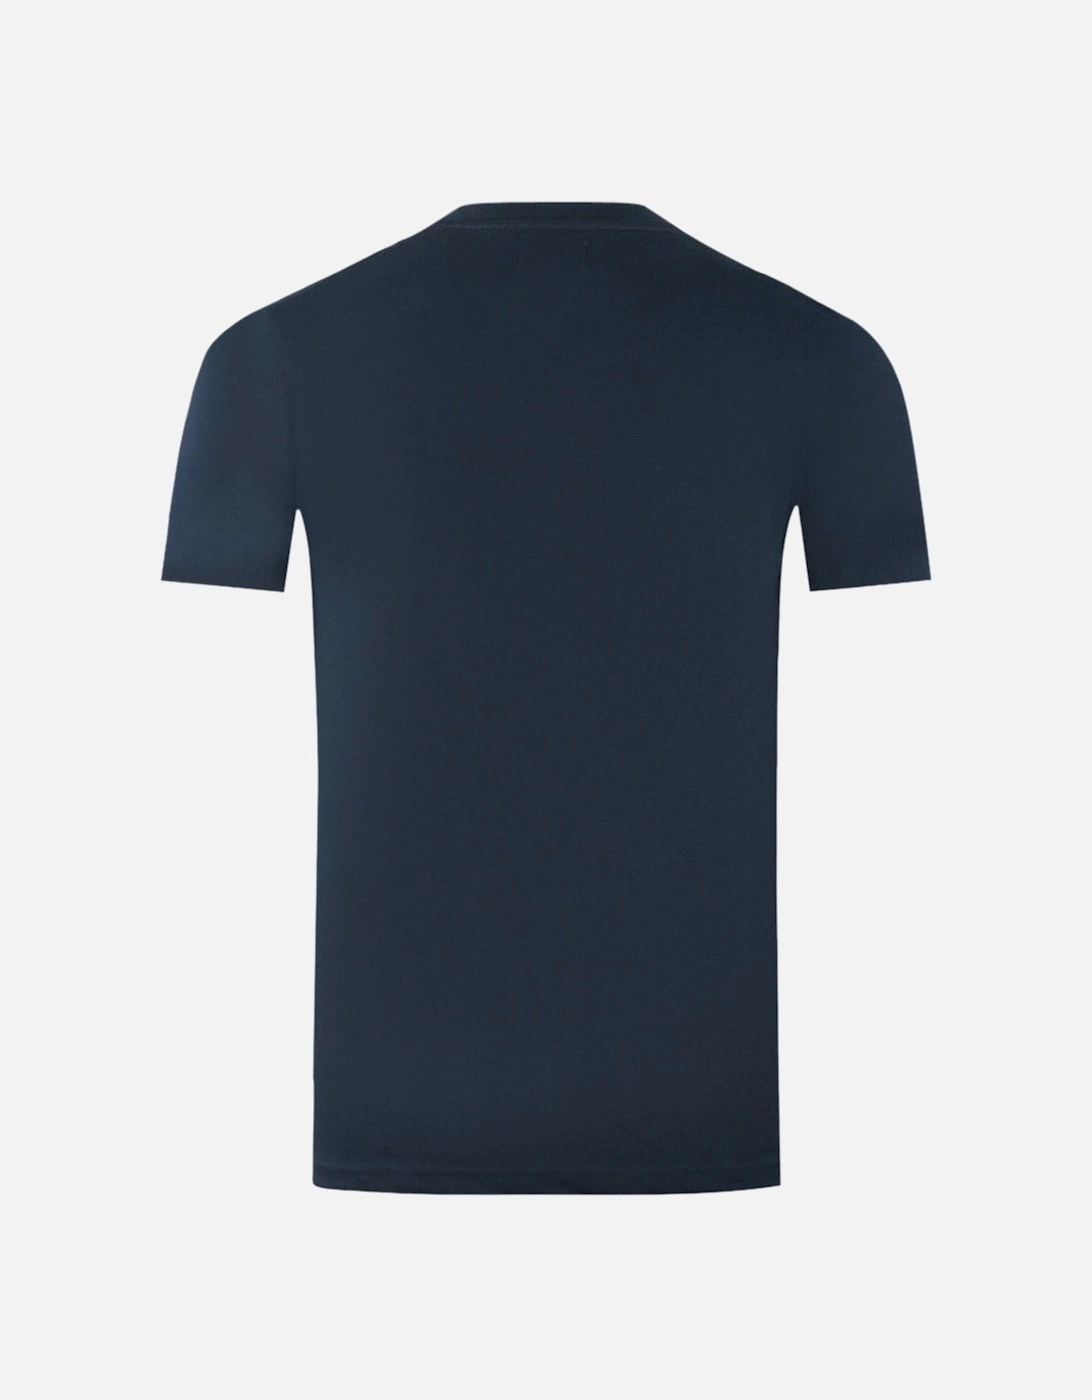 Large Bold London Aldis Brand Logo Navy Blue T-Shirt